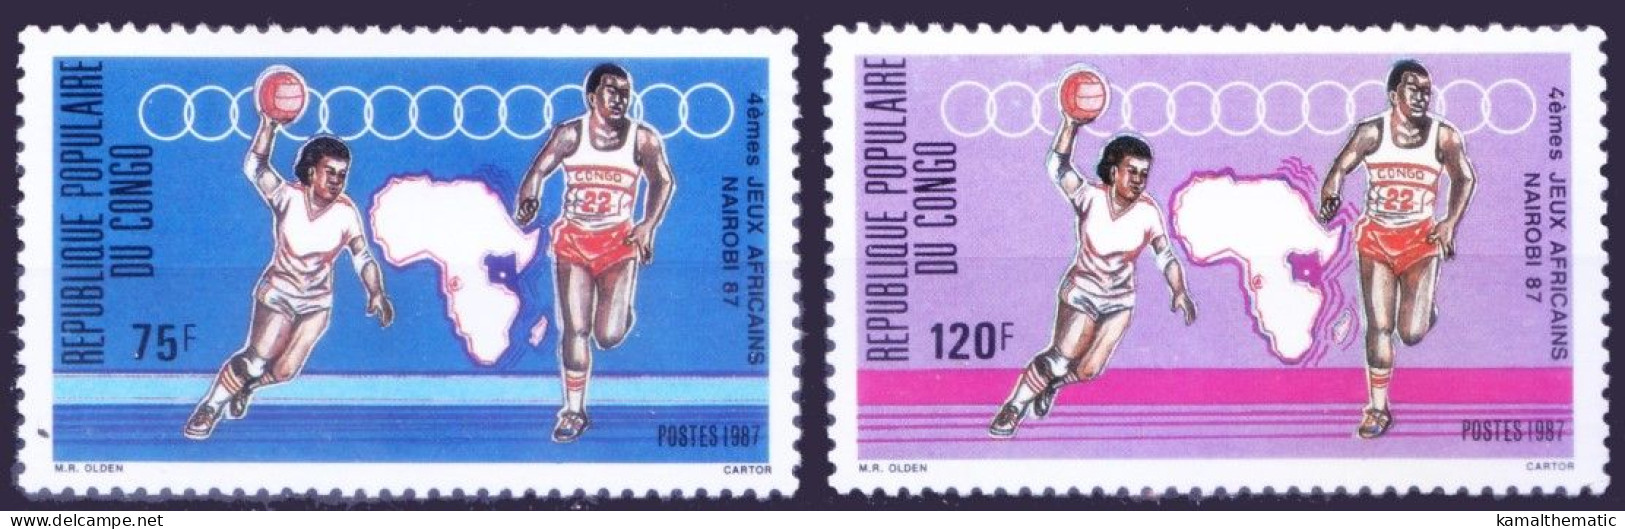 Congo Republic 1987 MNH 2v, Basketball, Sports, Athletes Athletics, Maps, Running - Basketball